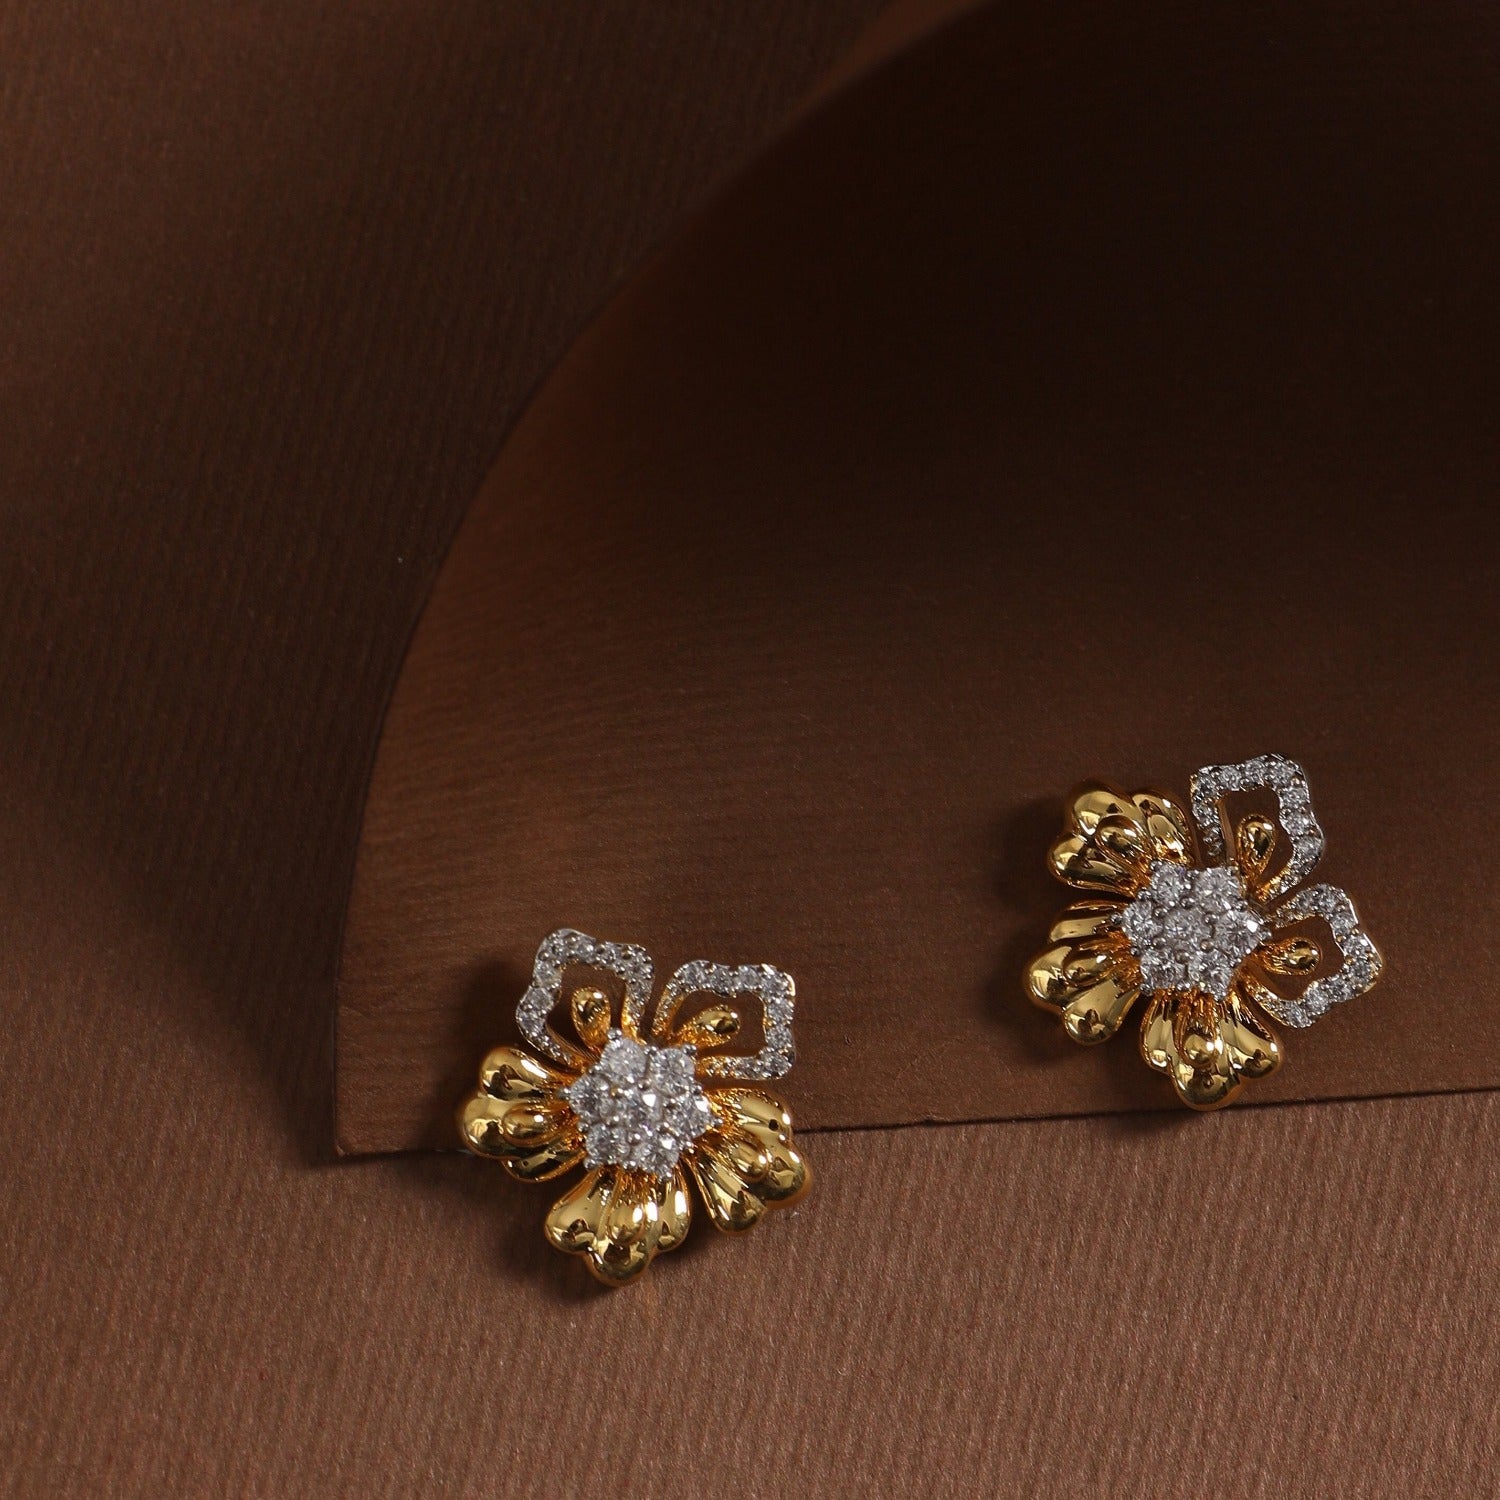 30+ gold flower model stone earrings designs // exclusive gold changeable studs  earrings designs - YouTube